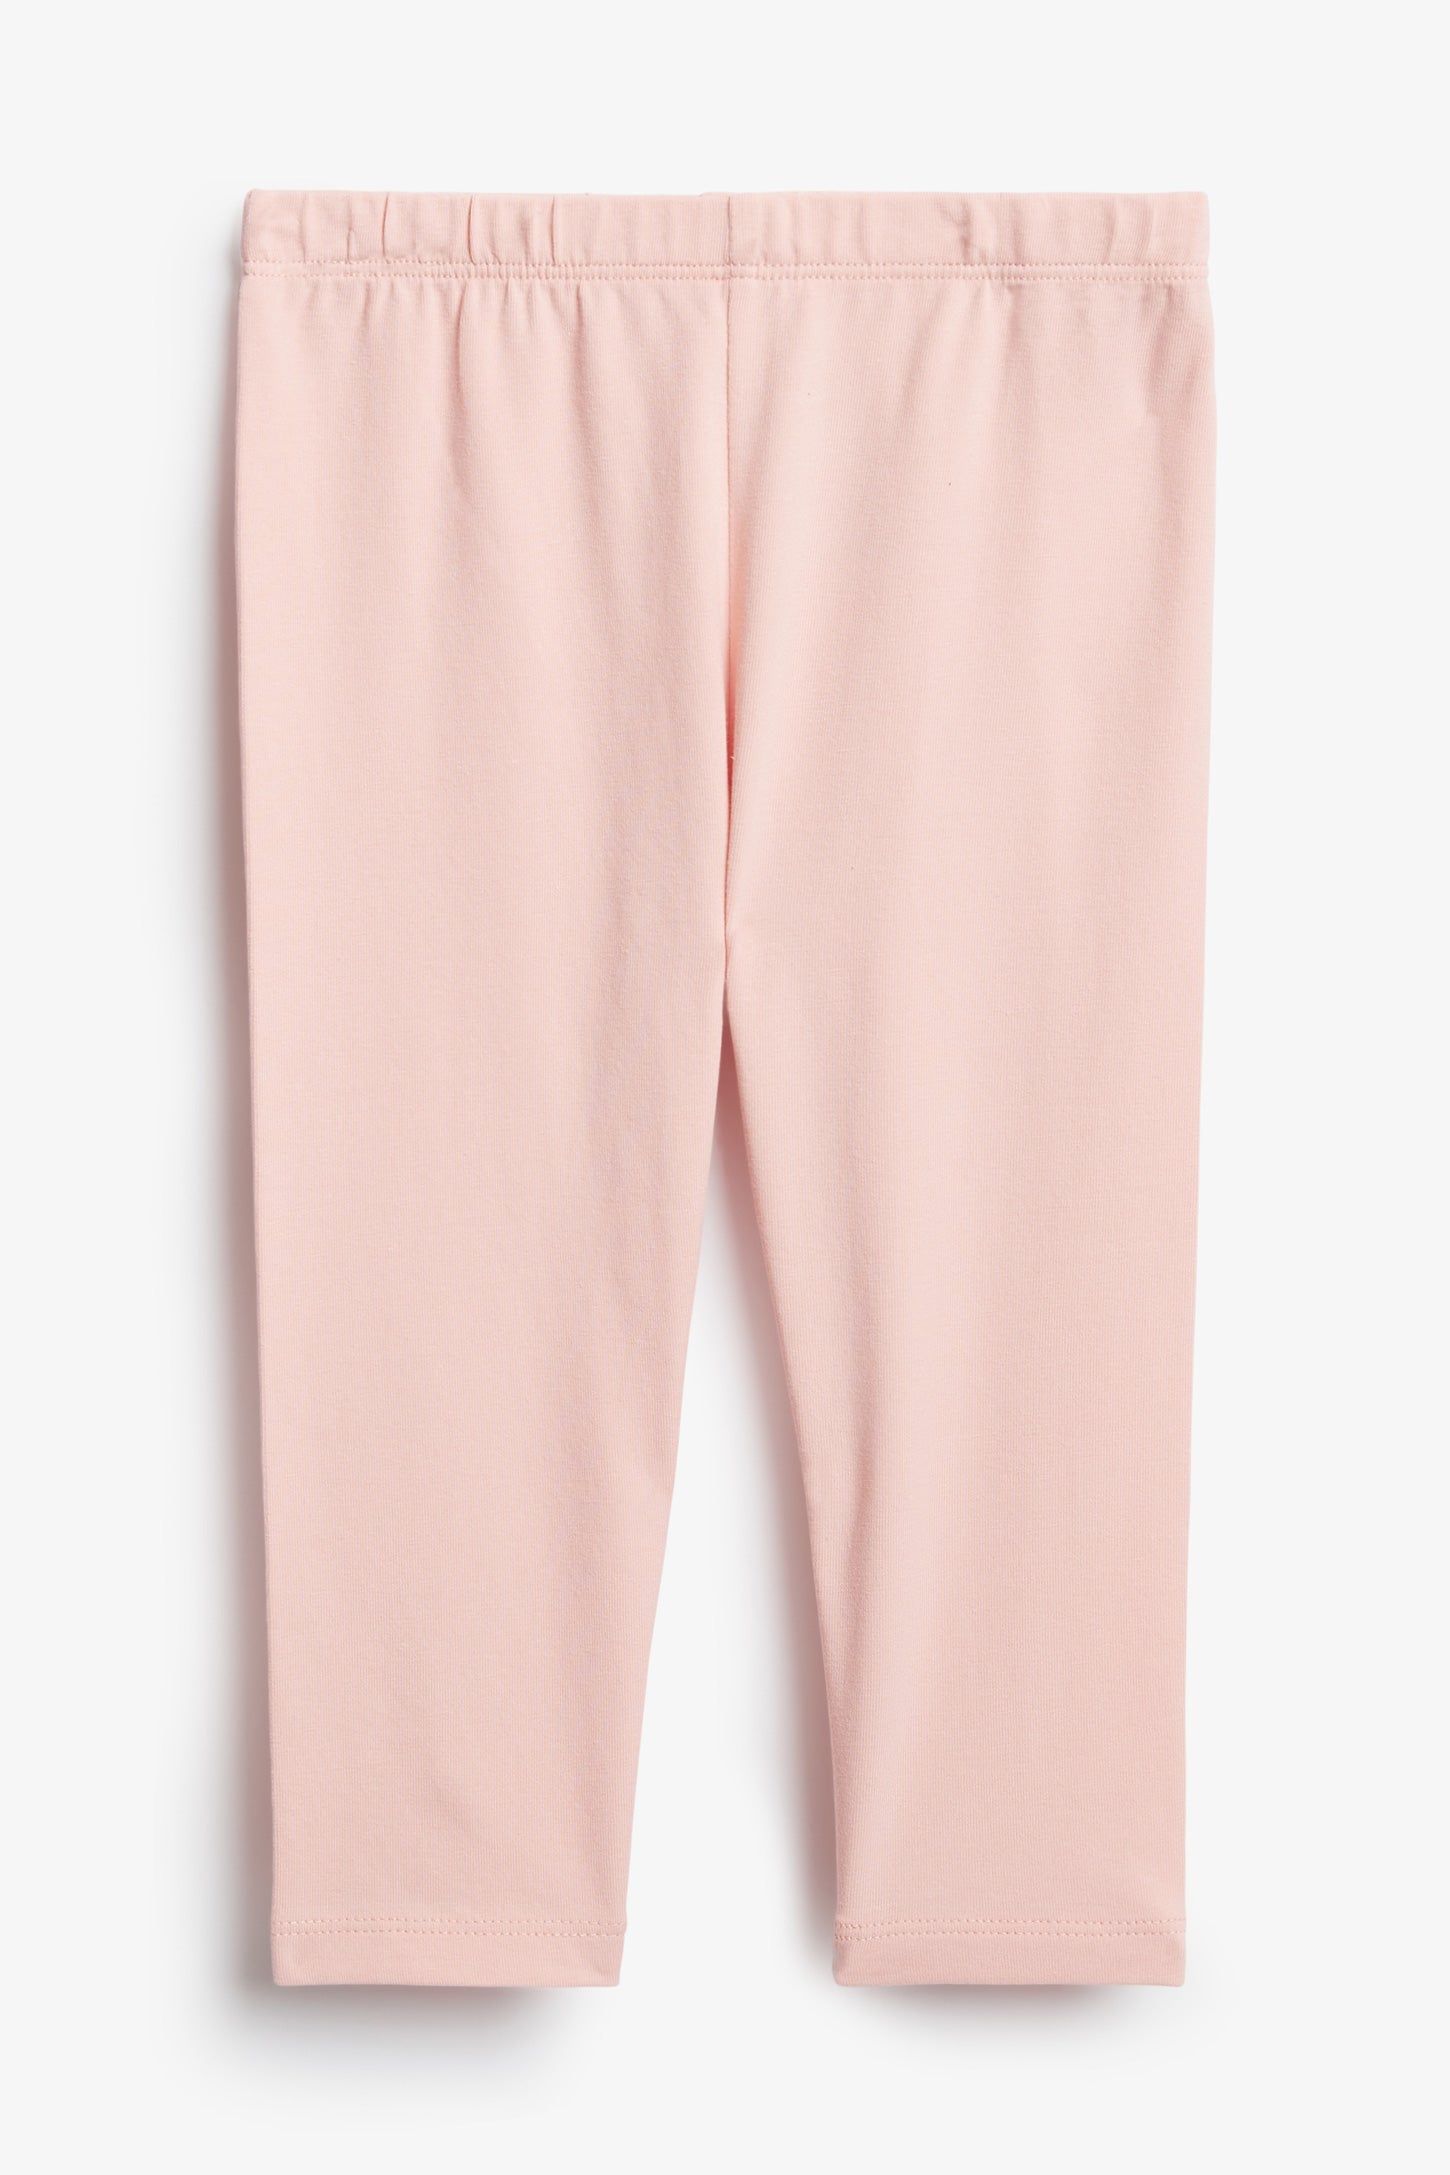 Cotton capri leggings, 2/$20 - Girls